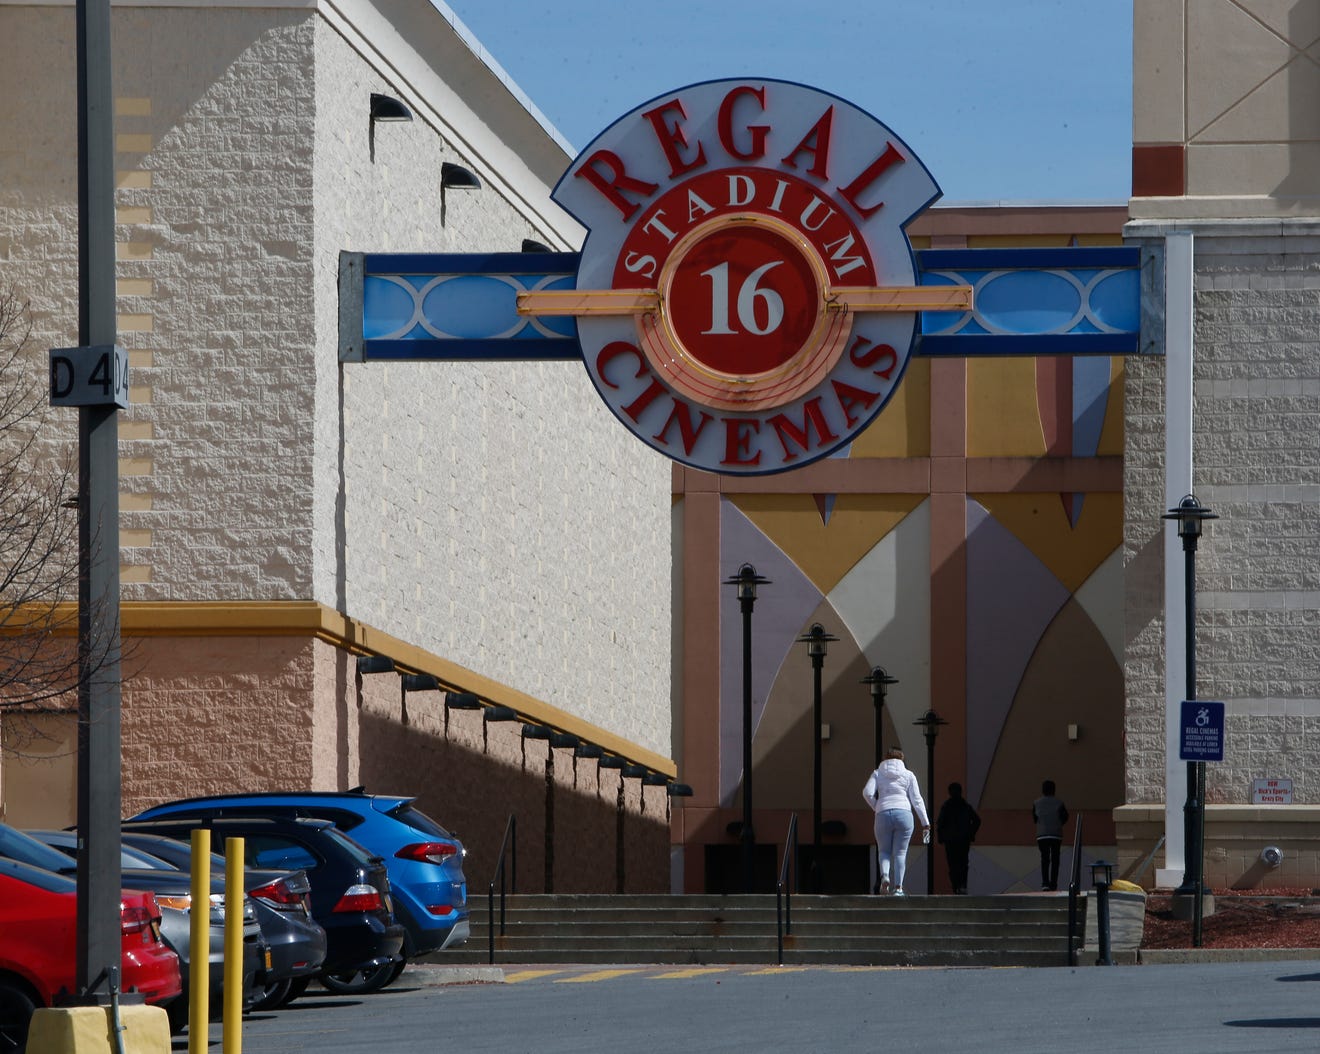 Regal Poughkeepsie Galleria movie theater to reopen Friday